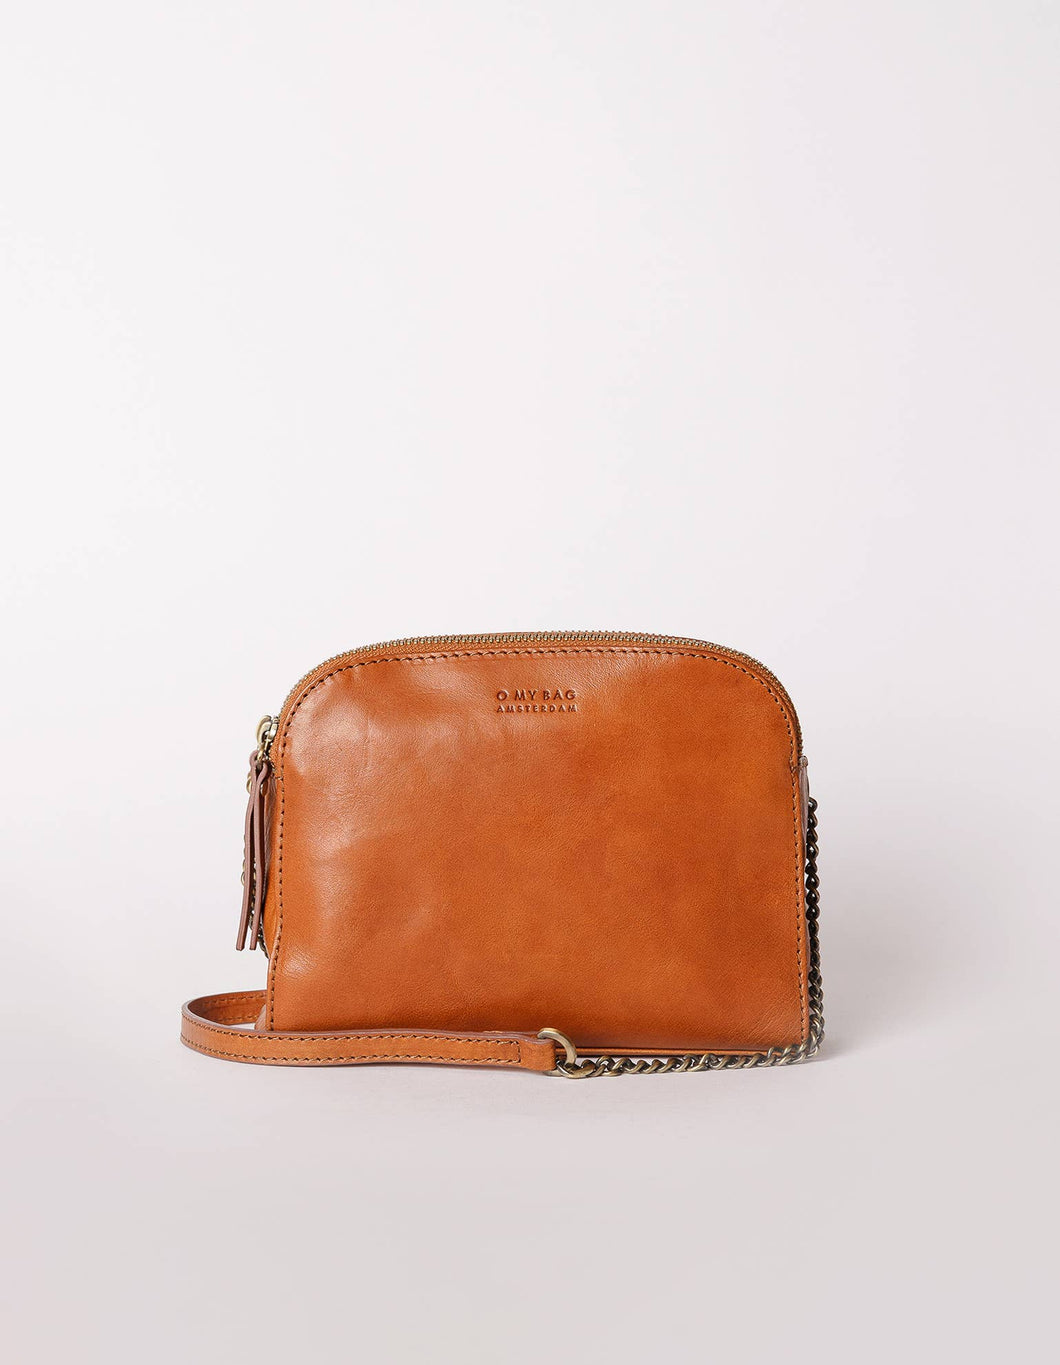 O My Bag - Leather Bag Emily - Cognac Stromboli Leather